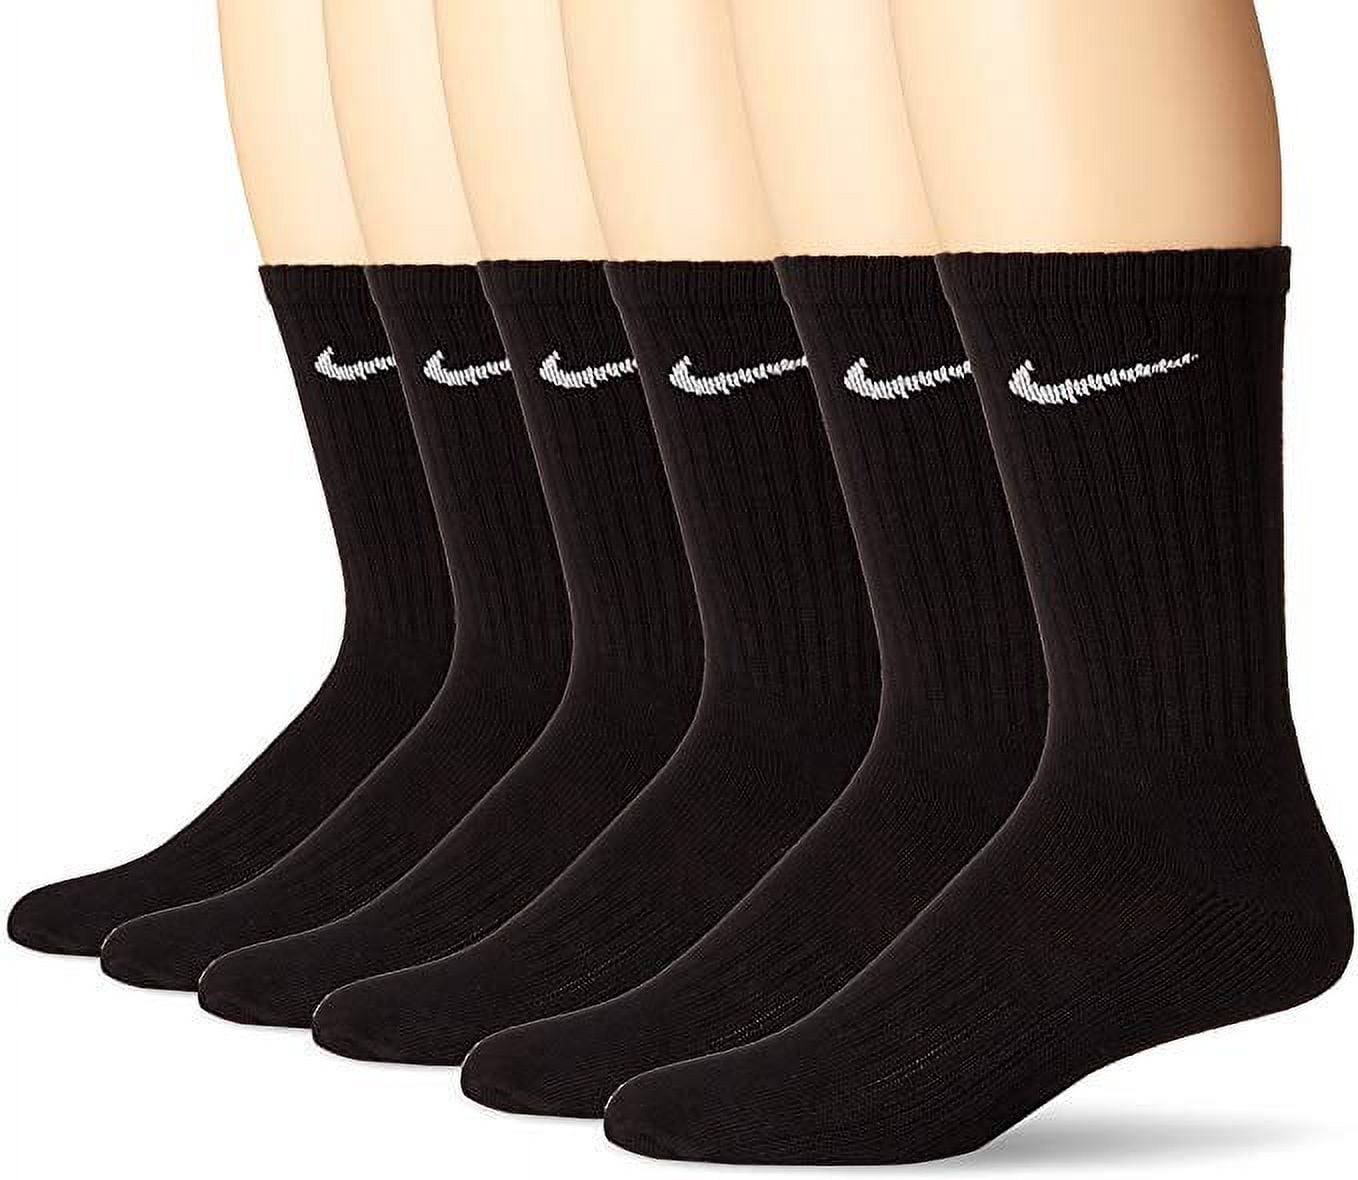 Nike Men's Band Cotton Crew Socks 6 Pack, Black Large 8-12 - NEW ...